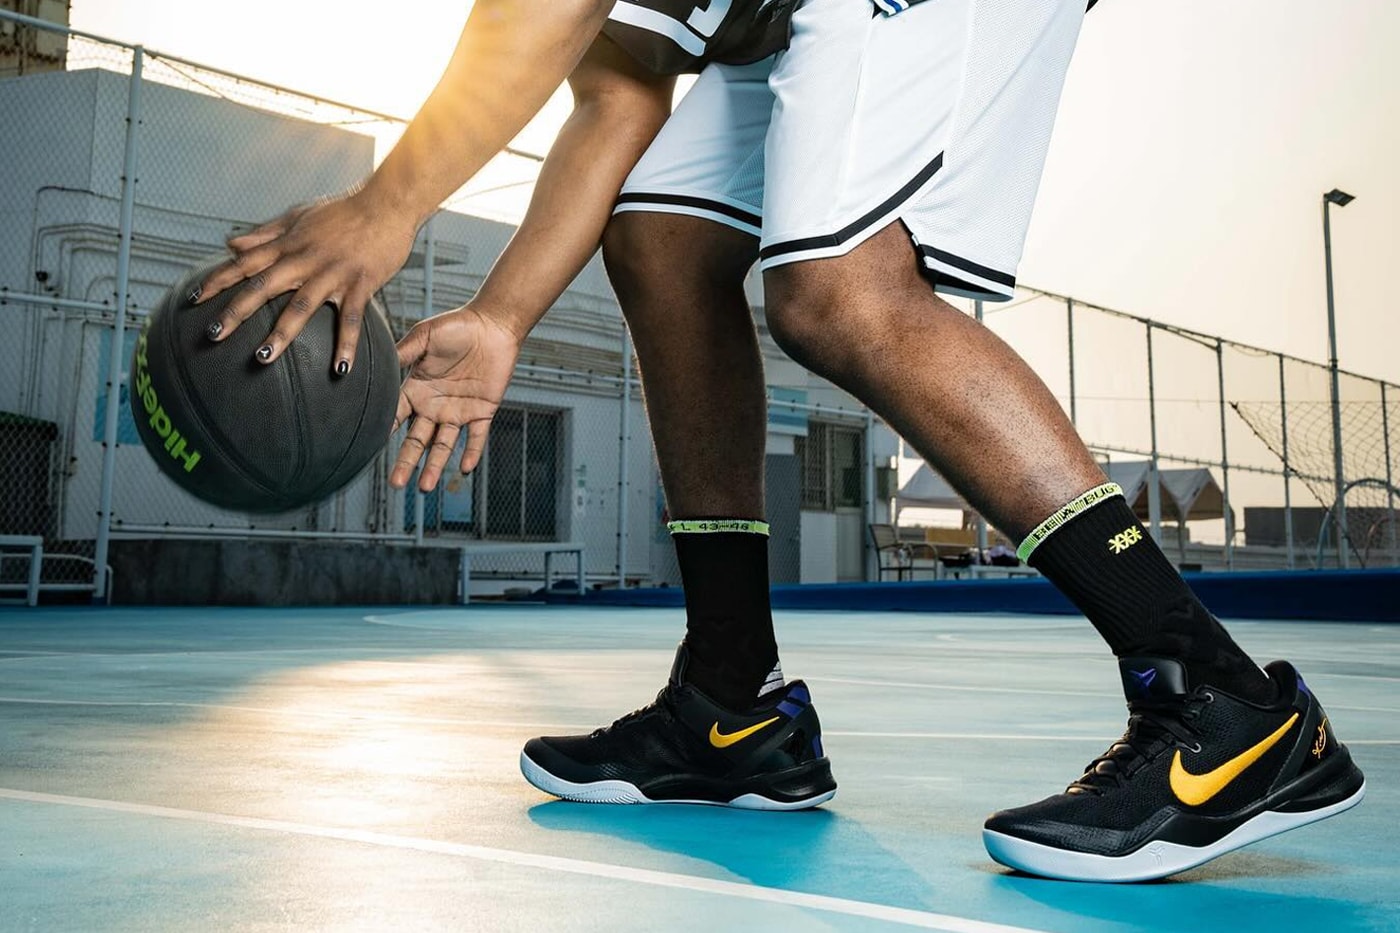 Detailed Look at the Nike Kobe 8 Protro "Hollywood Nights" HF9550-001 kobe bryant black mamba basketball shoes sneakers black gold and purple Black/University Gold-White-Court Purple